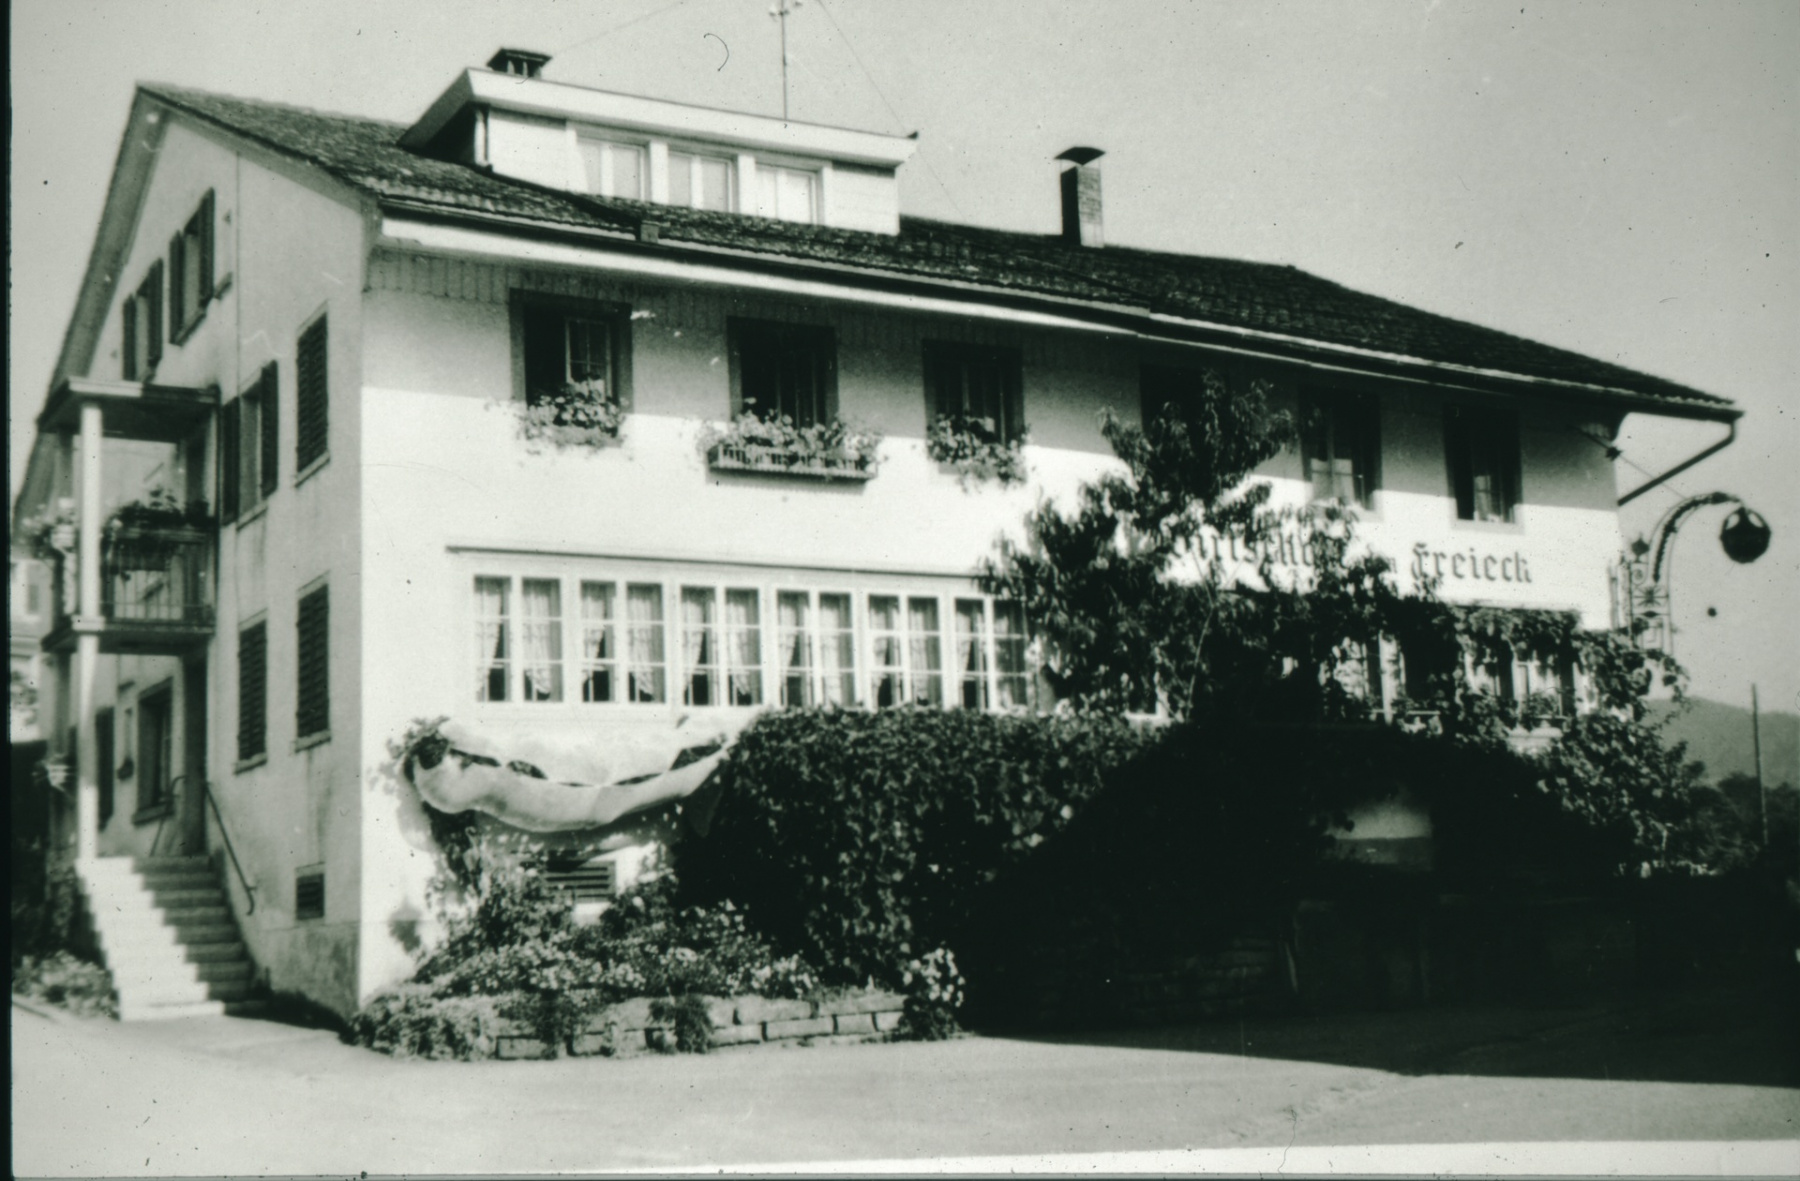 Restaurant Freieck, Adetswil, Umbau 1936